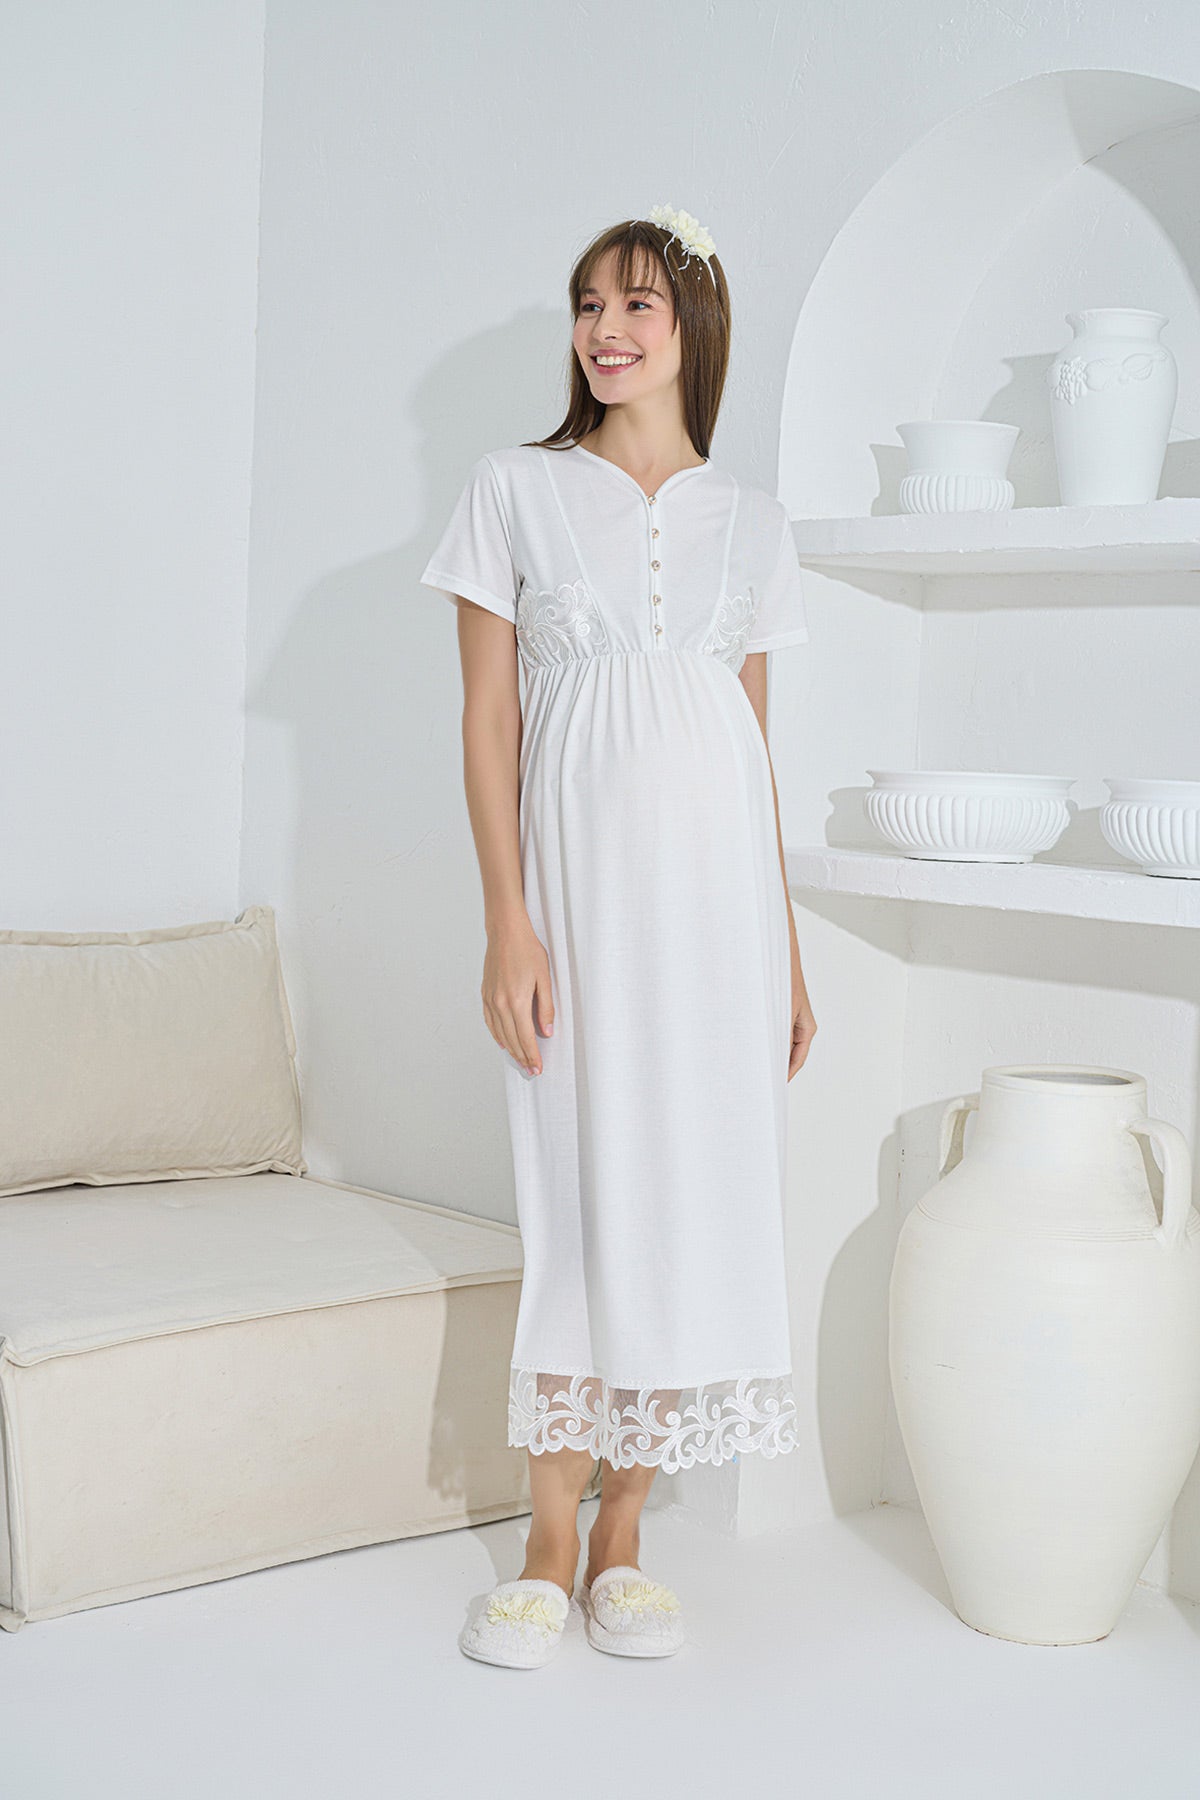 Shopymommy 0735 Lace Skirt Maternity & Nursing Nightgown Ecru